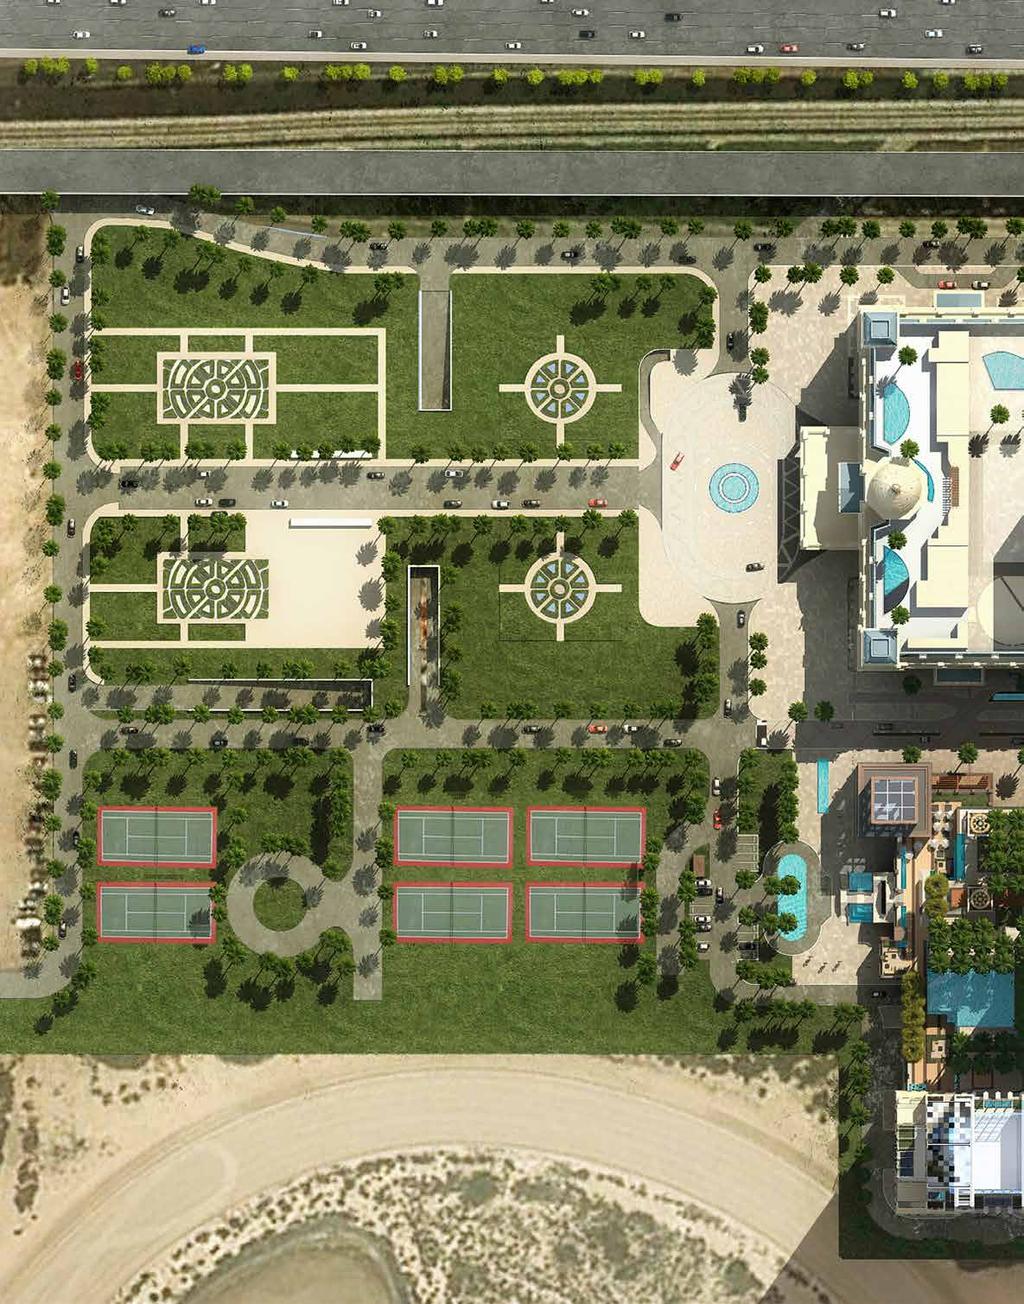 1 branded 11 AL HABTOOR CITY PLAN 1. Habtoor Palace, LXR Hotels & Resorts 2. The Atrium & La Perle by Dragone 3. V Hotel, Curio Collection by Hilton 4. Hilton Dubai Al Habtoor City 5.